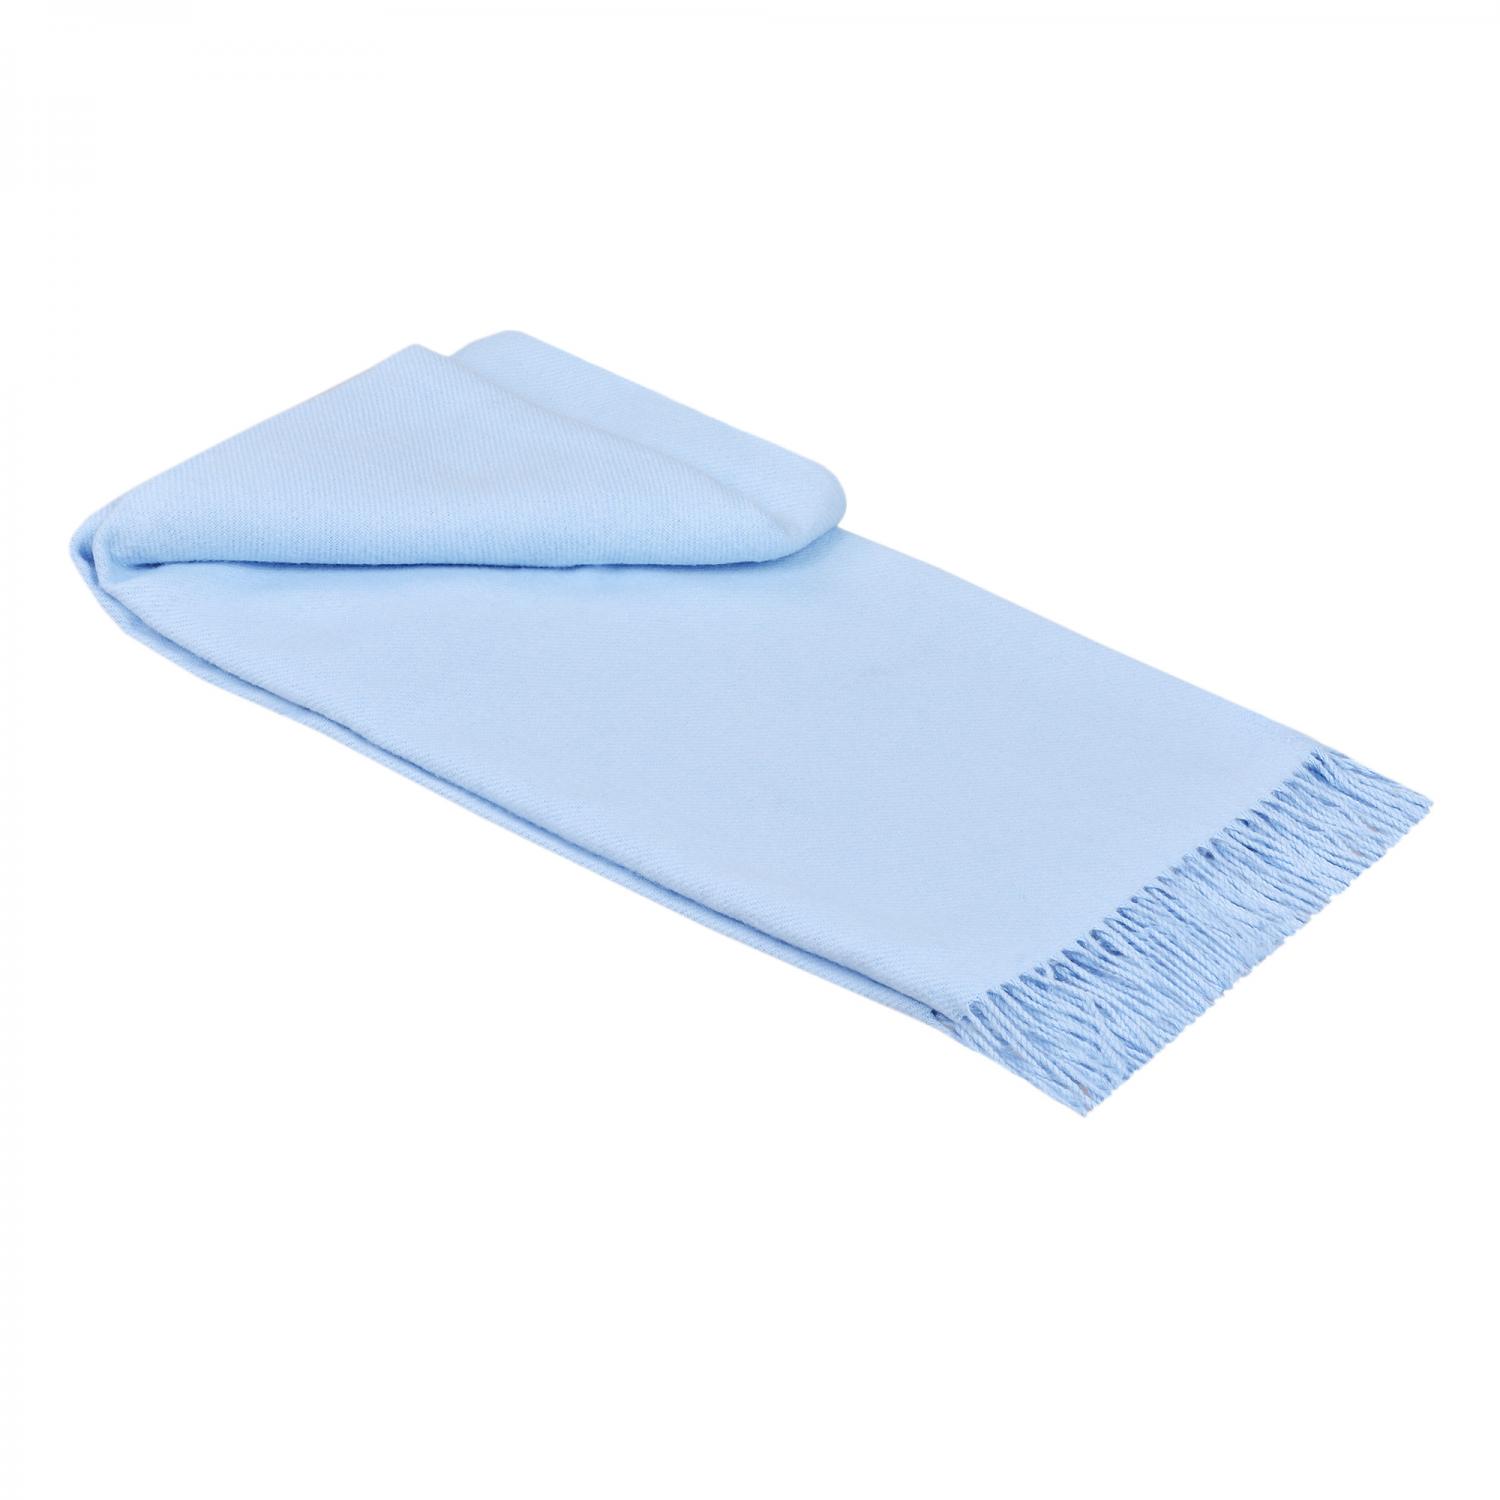 100% soft cotton blanket   throw